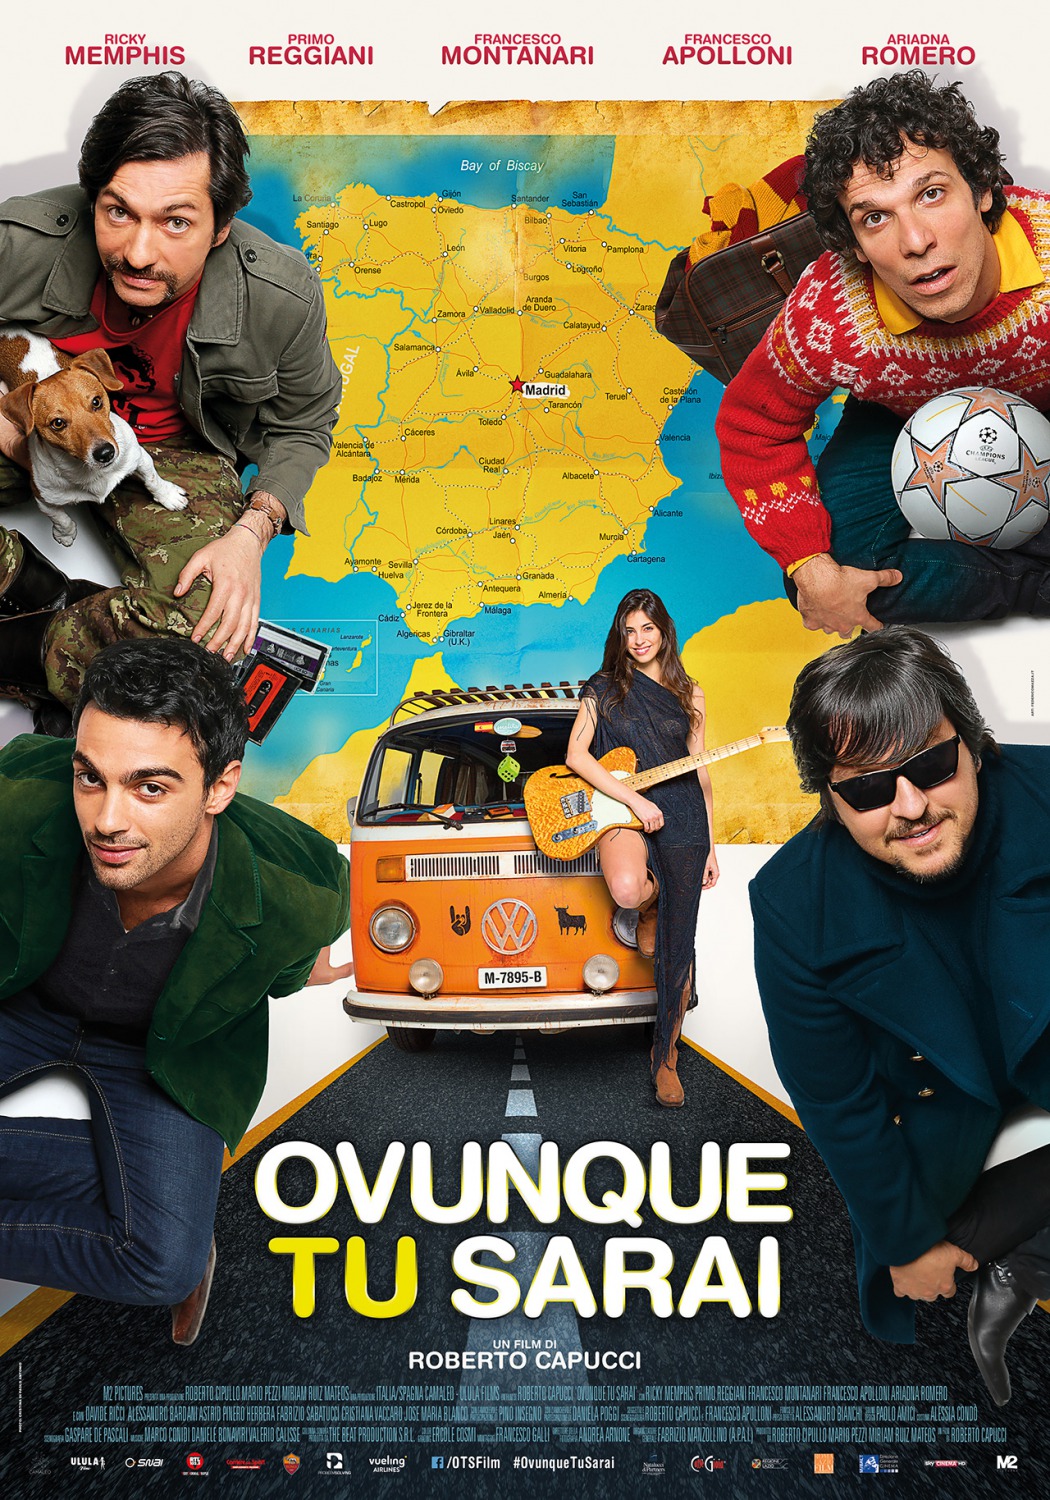 Extra Large Movie Poster Image for Ovunque tu sarai (#1 of 7)